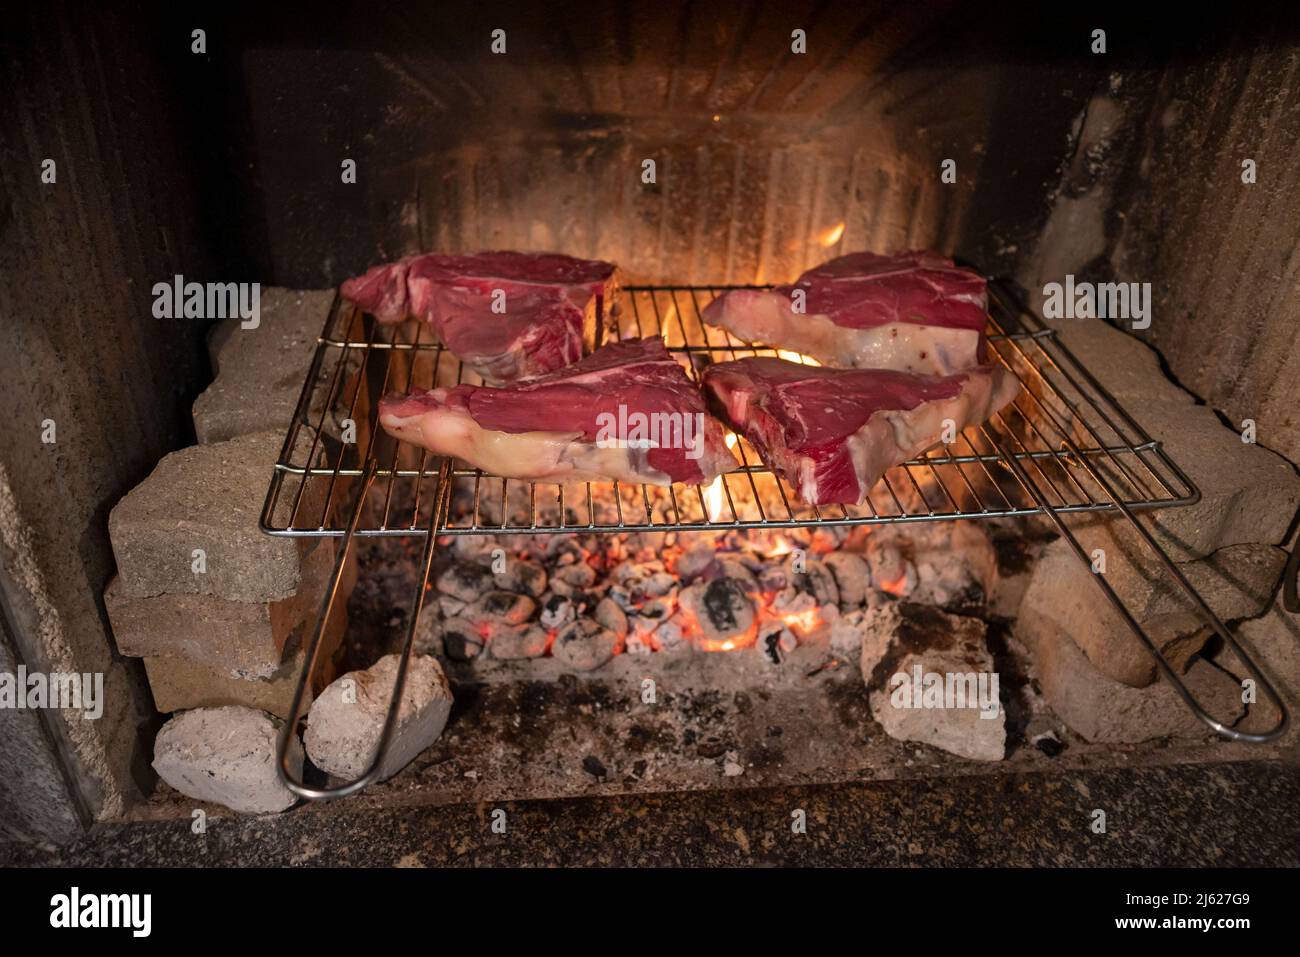 Barbecue Italian Fiorentina steak on the grill Stock Photo - Alamy